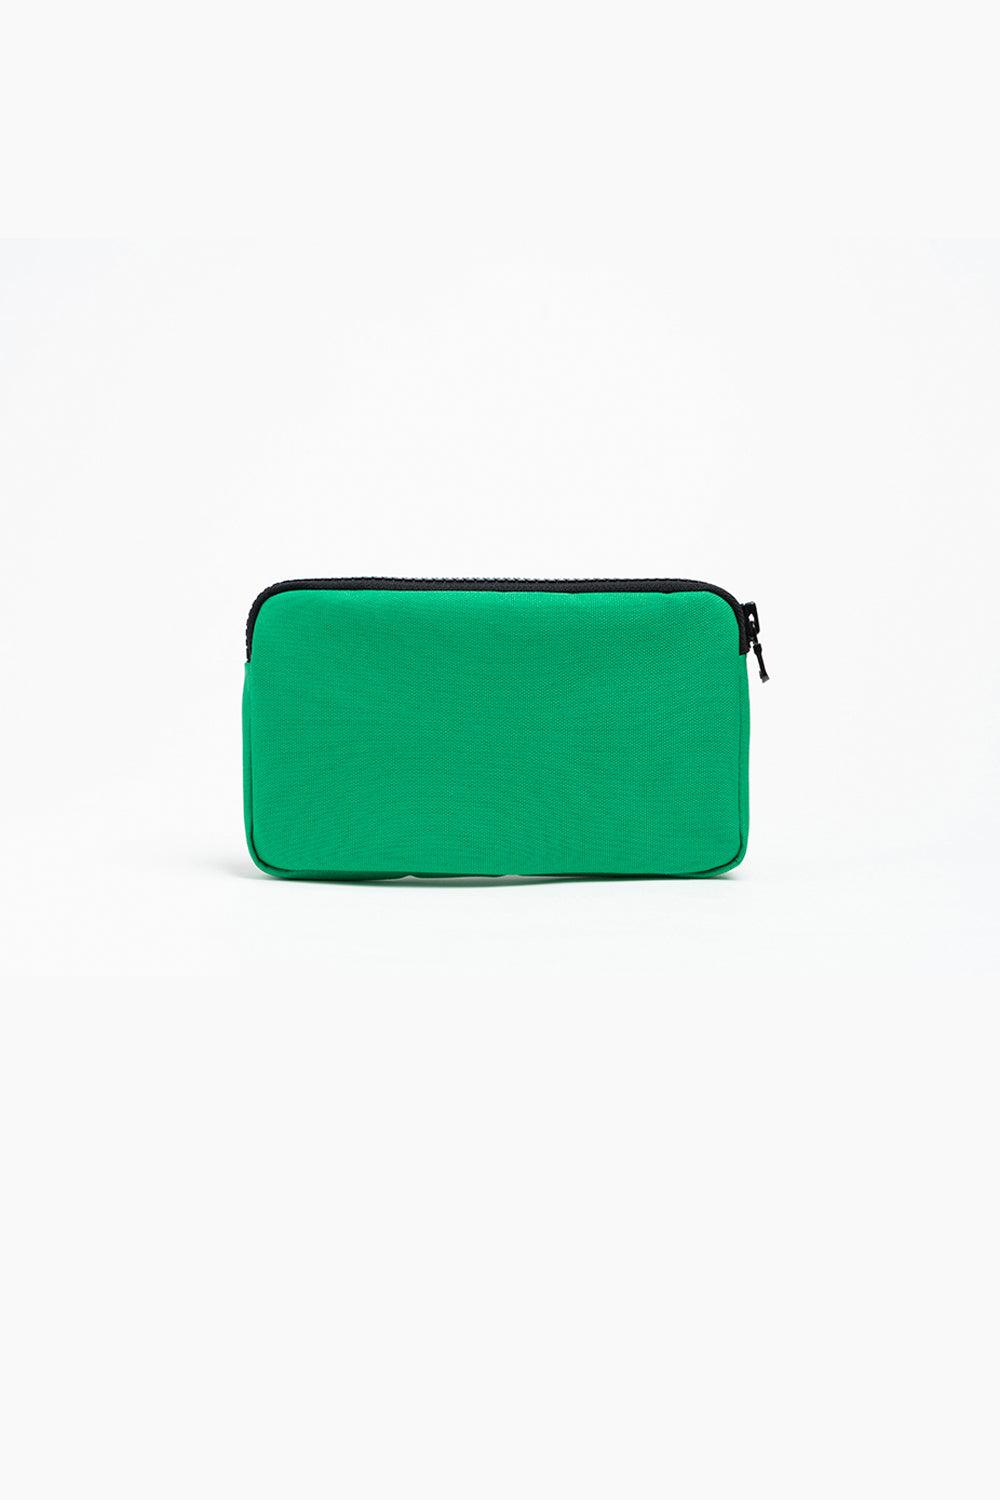 Muni Bum Bag | Slider Bag Grass Green 2 | Milagron